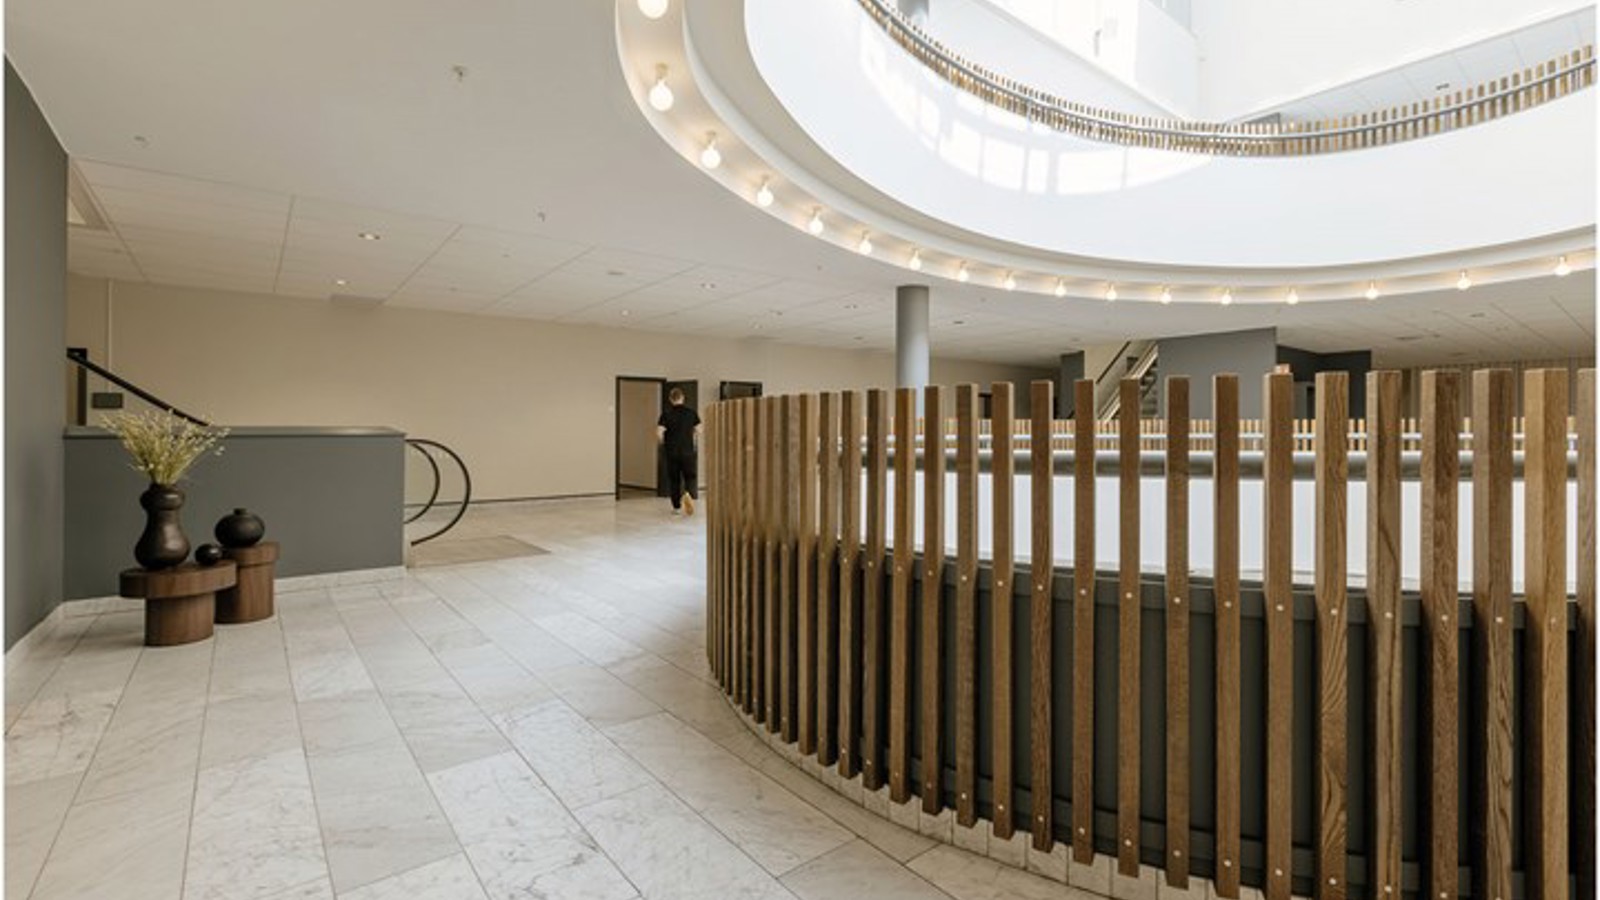 Open indoor area with wood paneling, light stone floor, round skylight and escalator